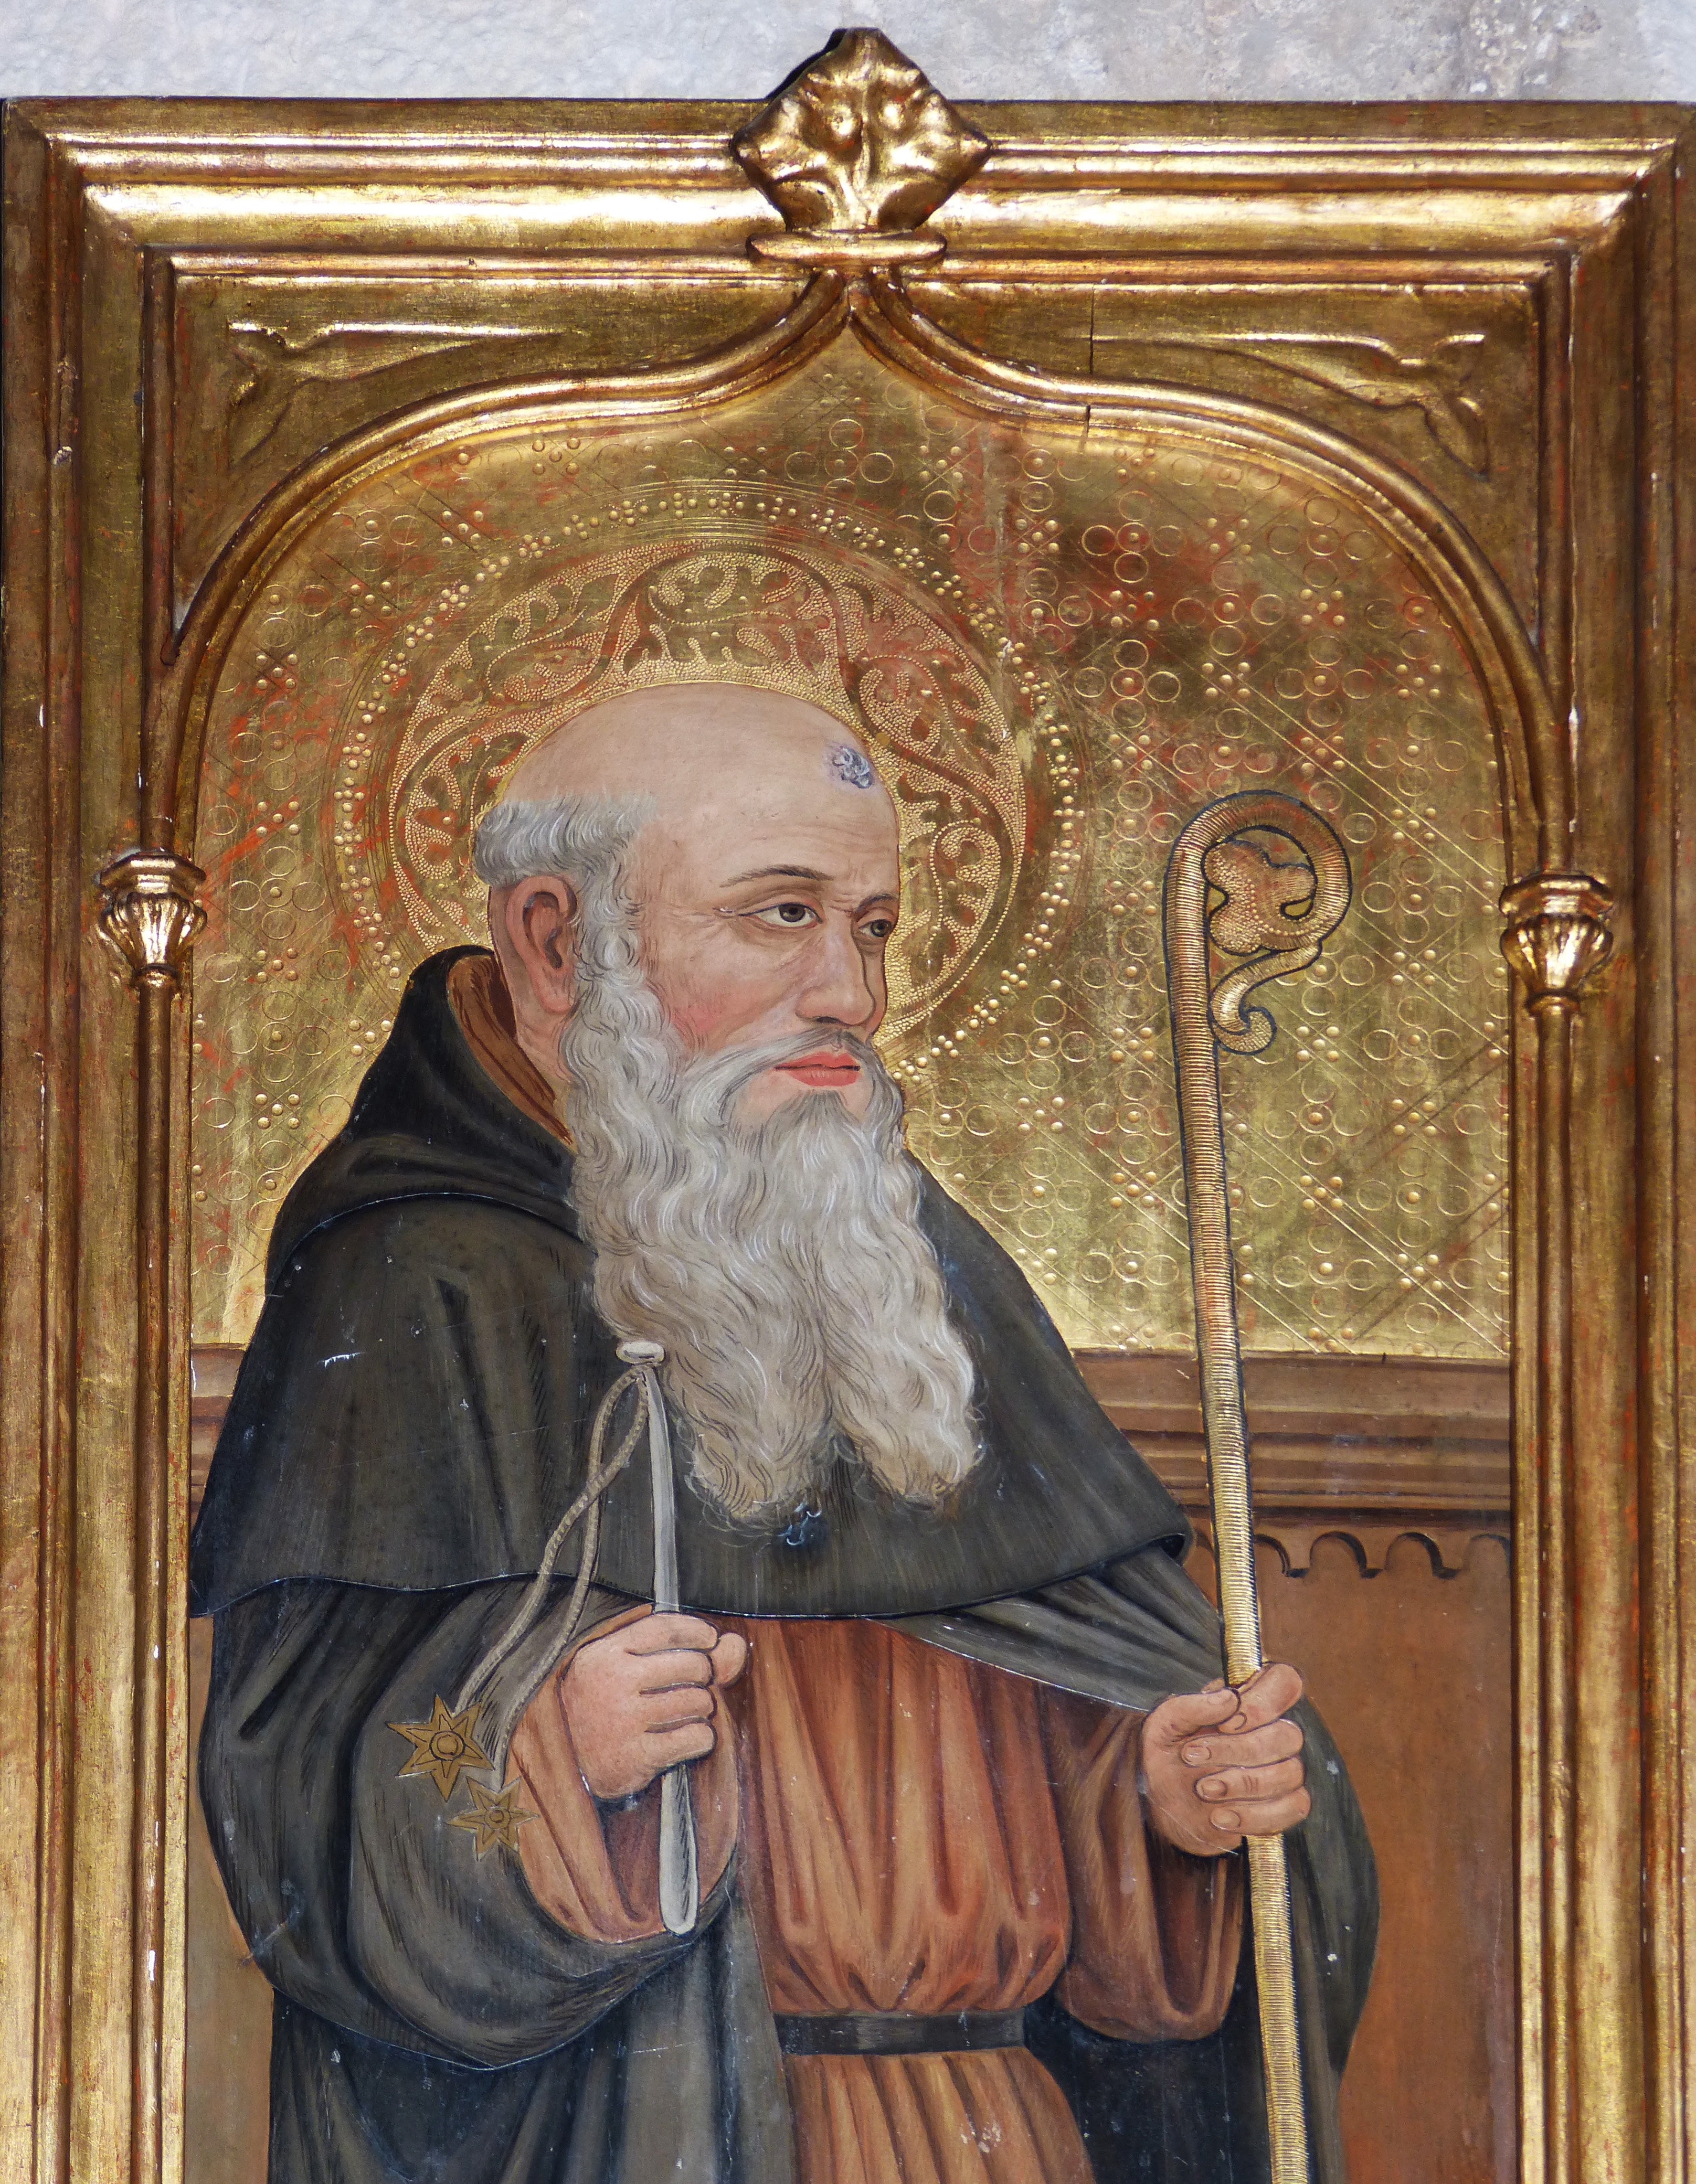 brass framed illustration of priest holding cane